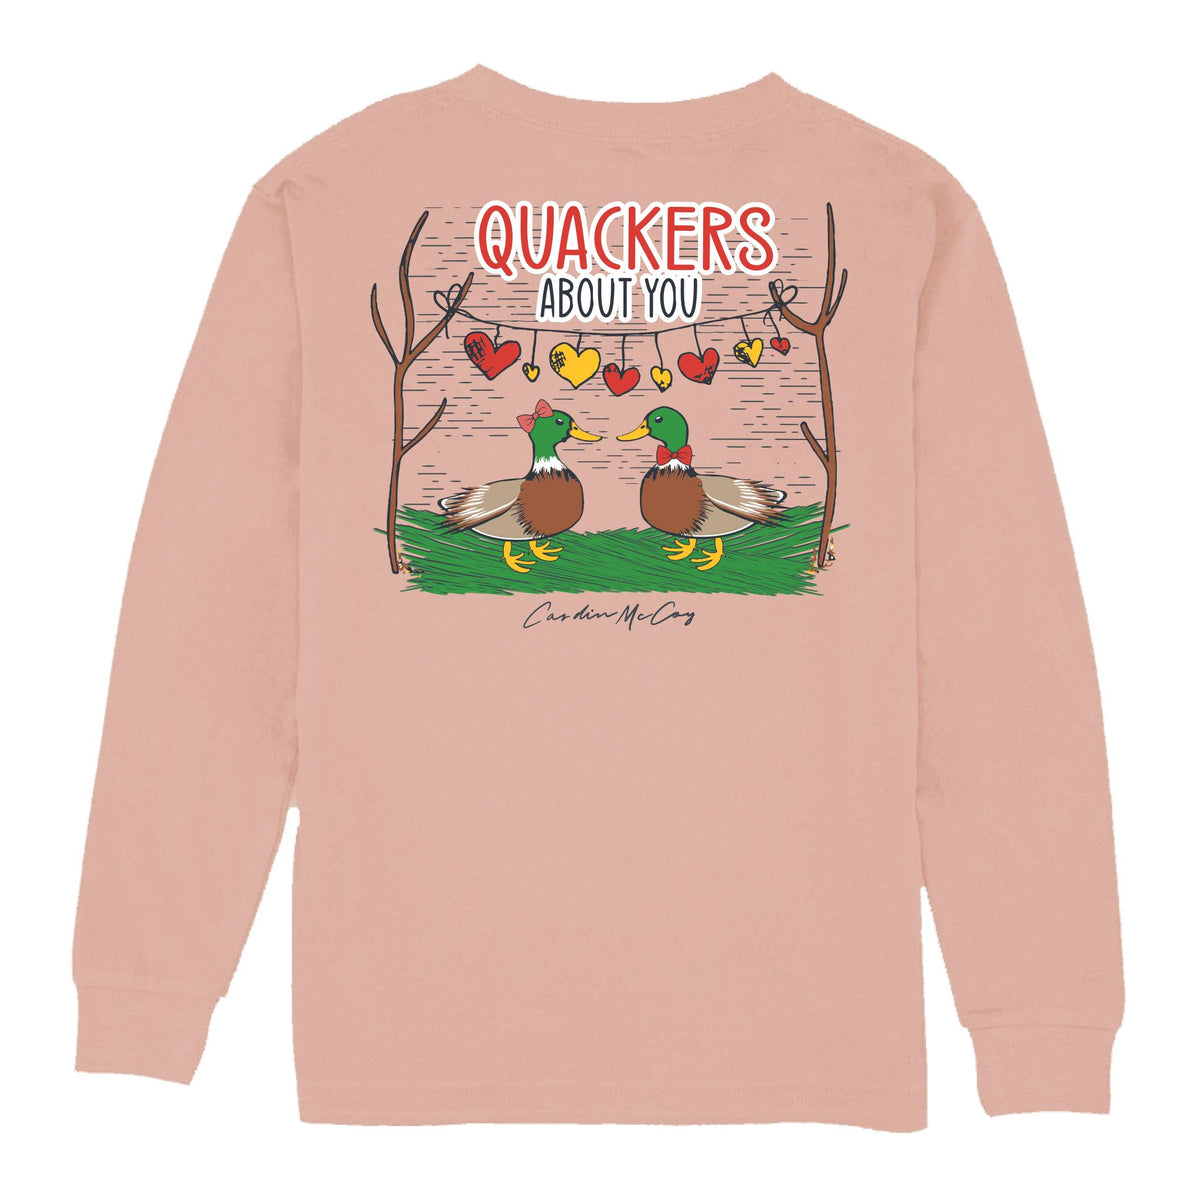 Kids' Quackers About You Long Sleeve Pocket Tee Long Sleeve T-Shirt Cardin McCoy Rose Tan XXS (2/3) 